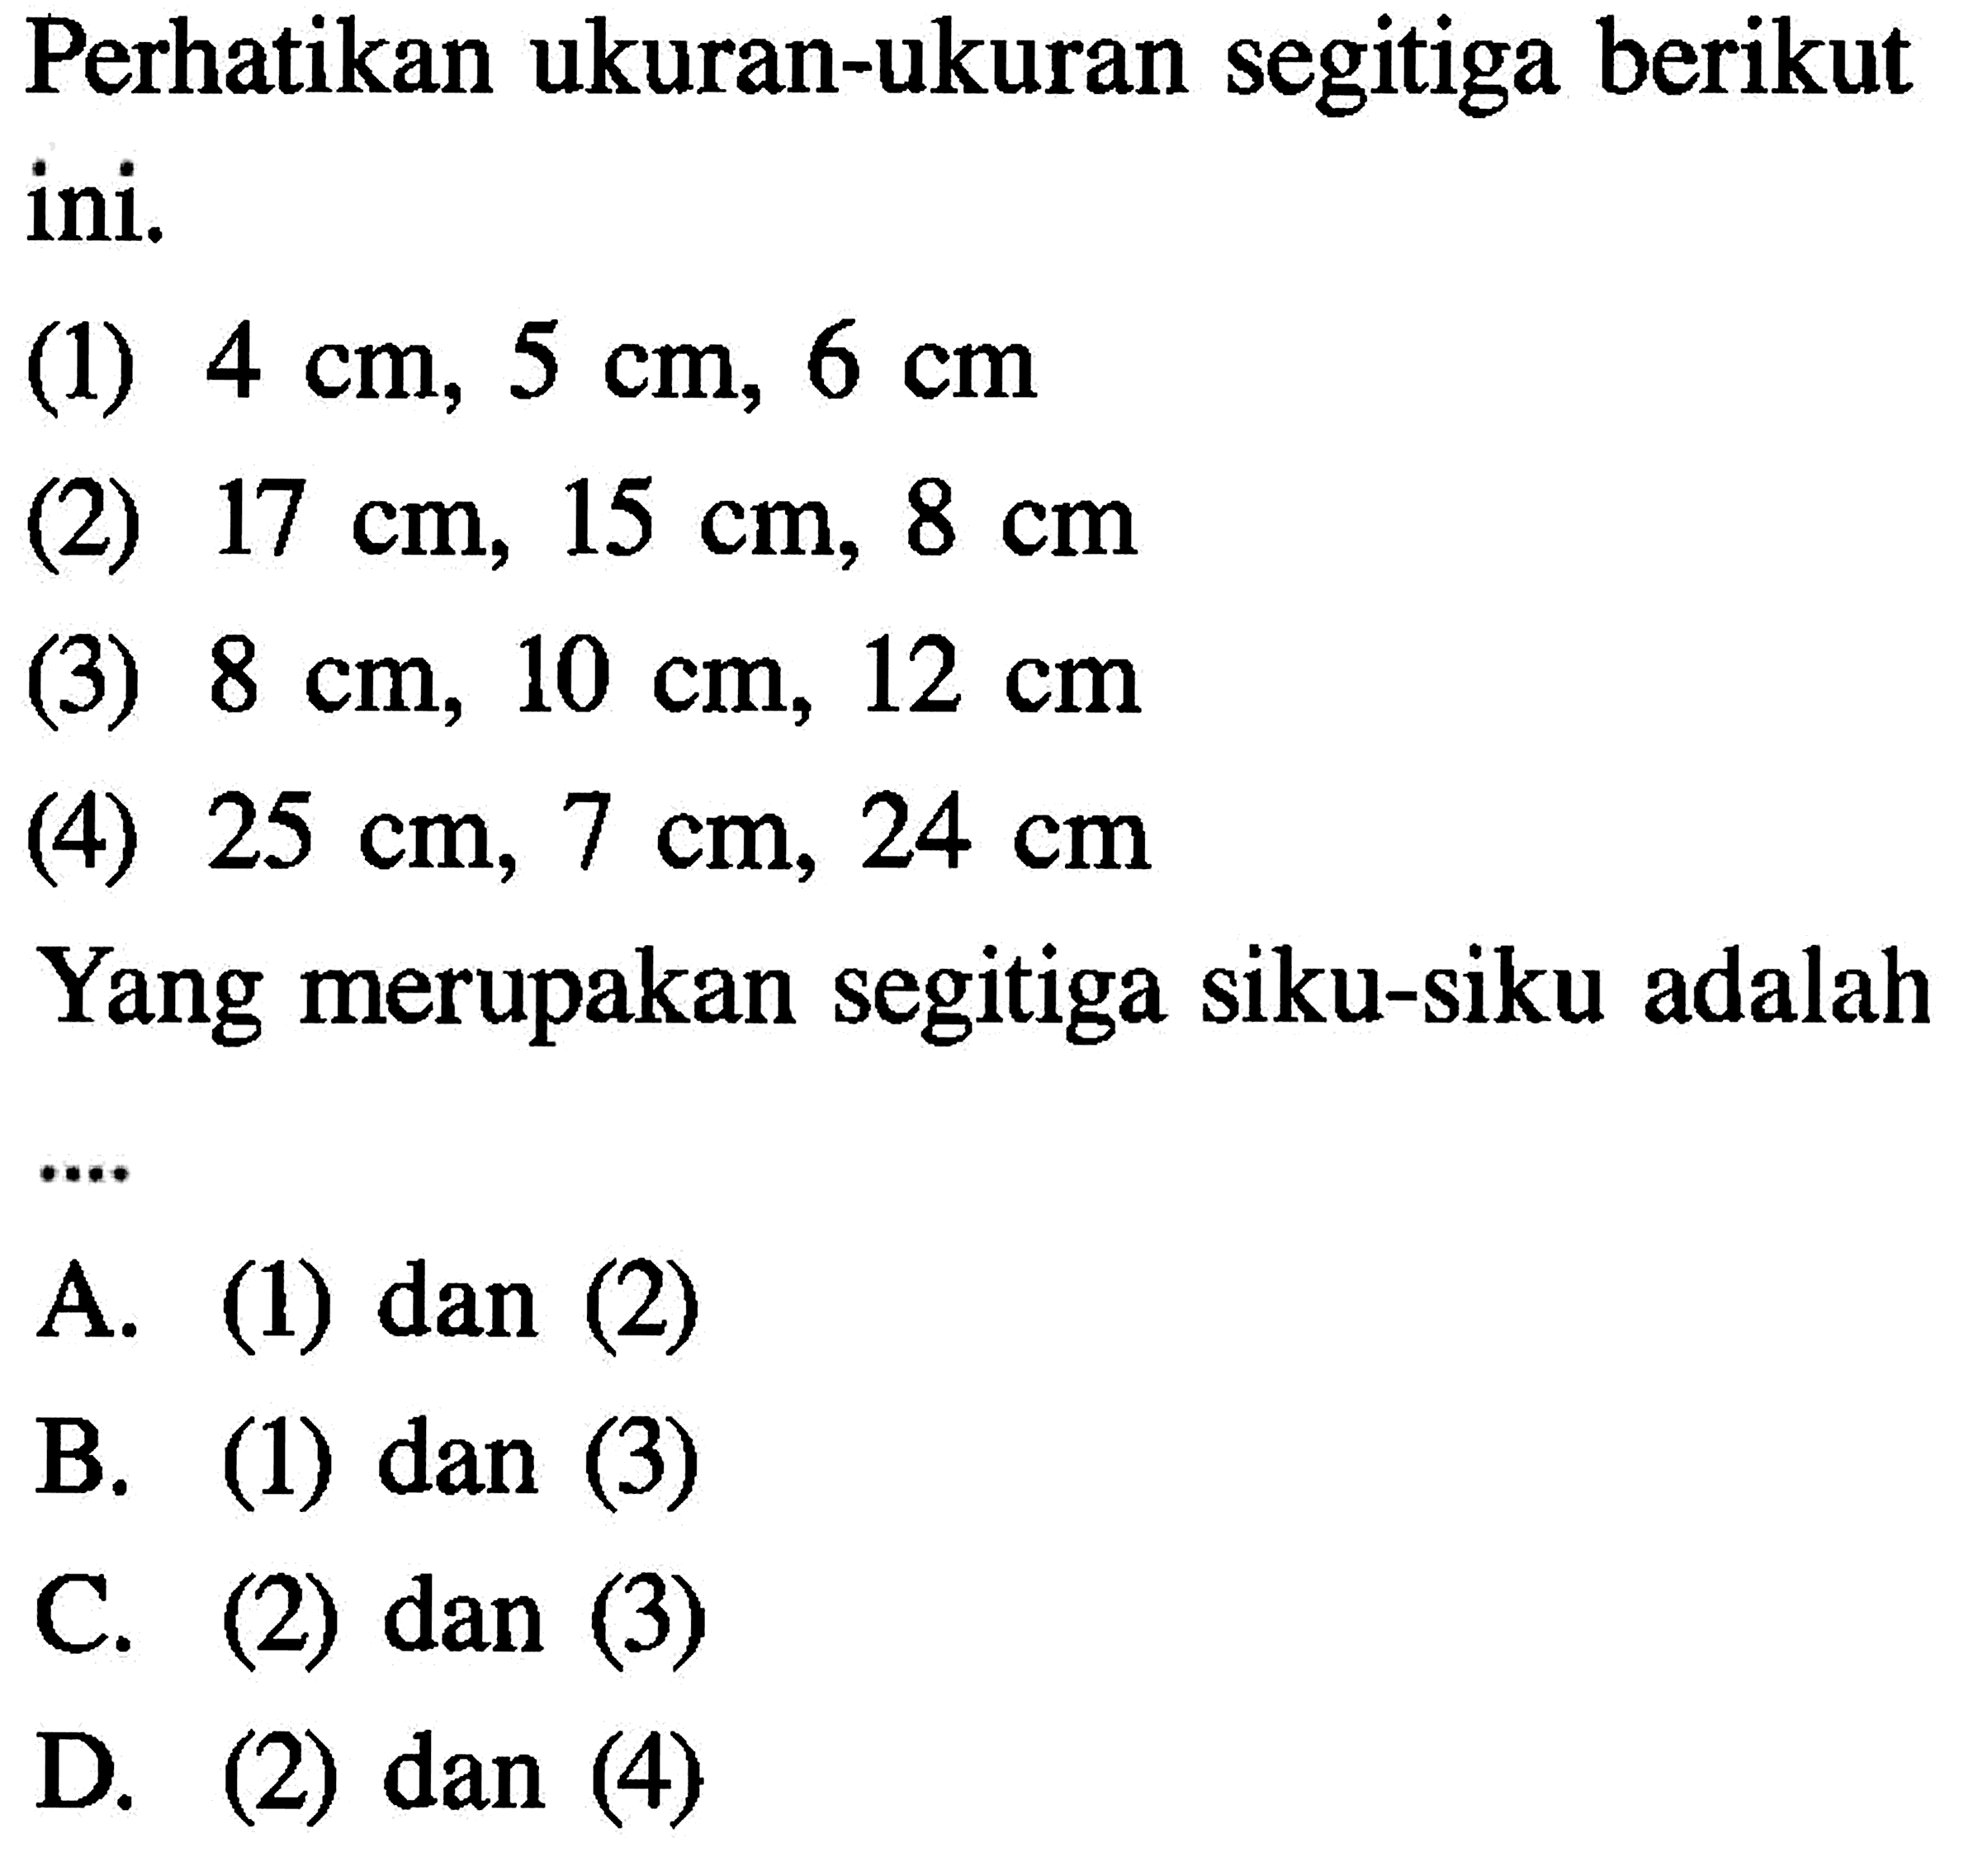 Perhatikan ukuran-ukuran segitiga berikut ini.(1)  4 cm, 5 cm, 6 cm (2)  17 cm, 15 cm, 8 cm (3)  8 cm, 10 cm, 12 cm (4)  25 cm, 7 cm, 24 cm Yang merupakan segitiga siku-siku adalah